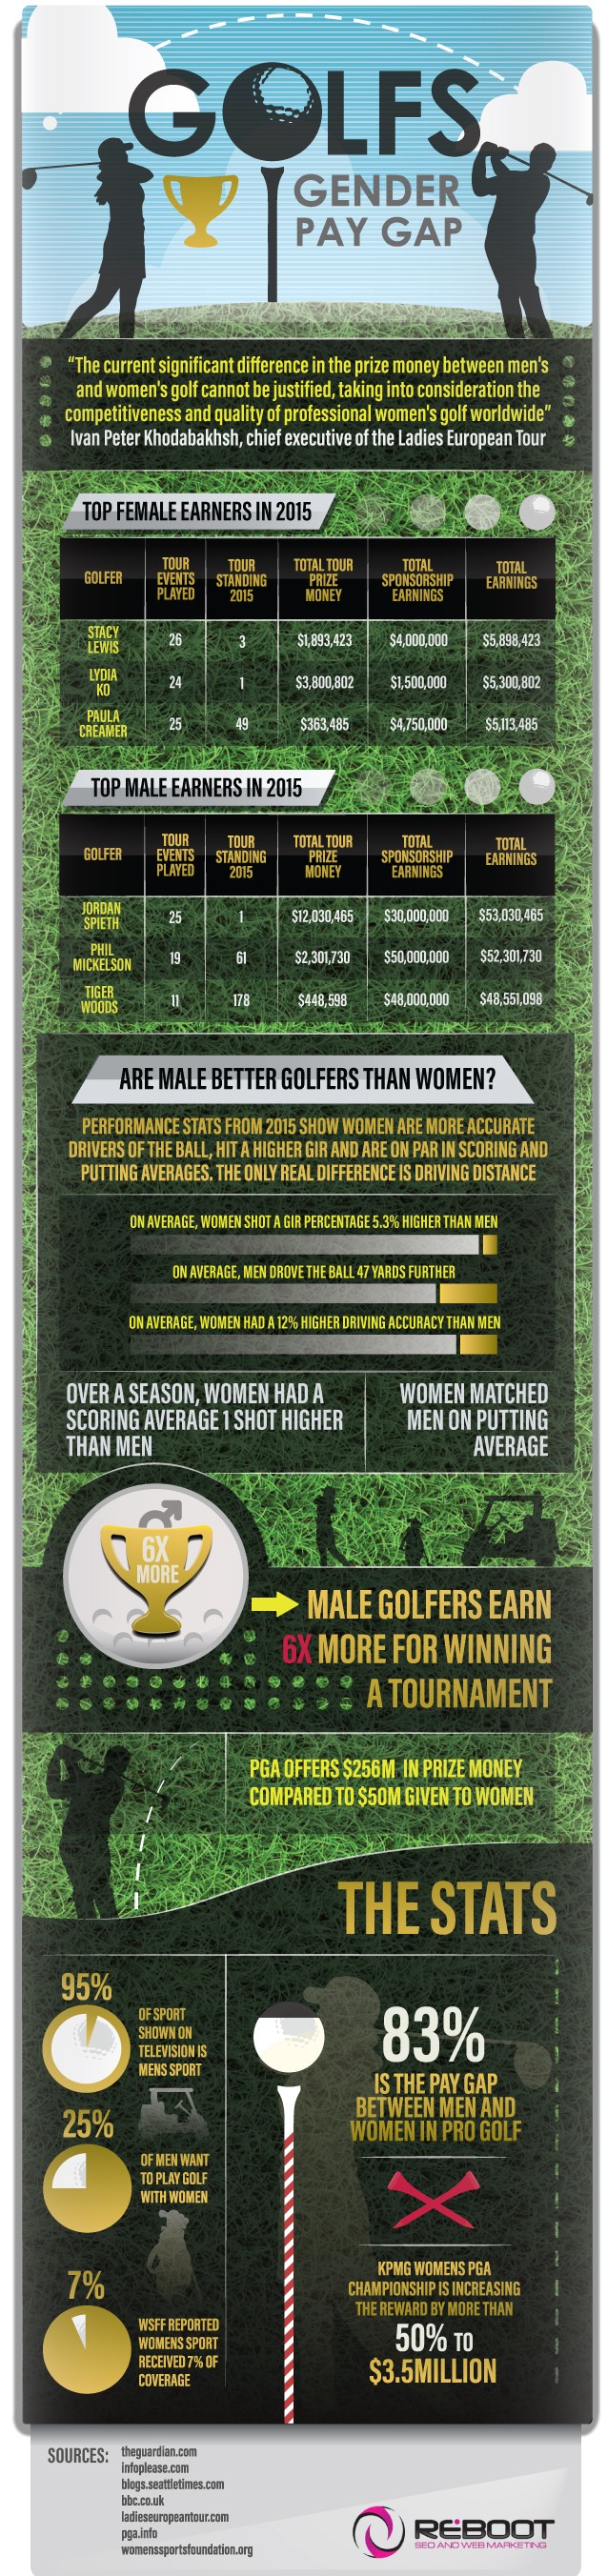 Golfs gender pay gap infographic